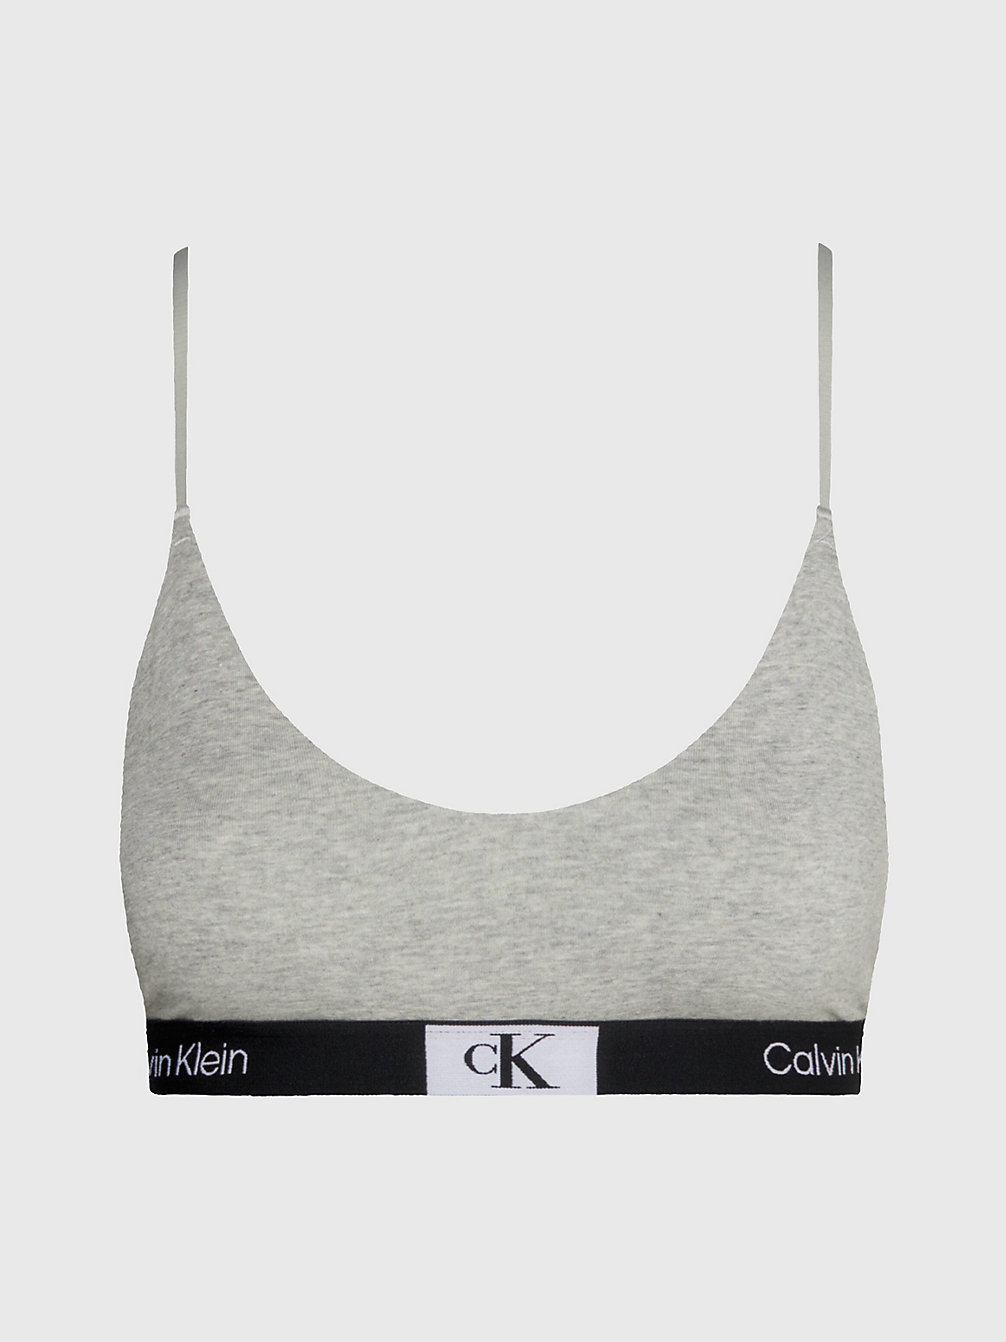 GREY HEATHER Brassière Sottile - Ck96 undefined Donne Calvin Klein